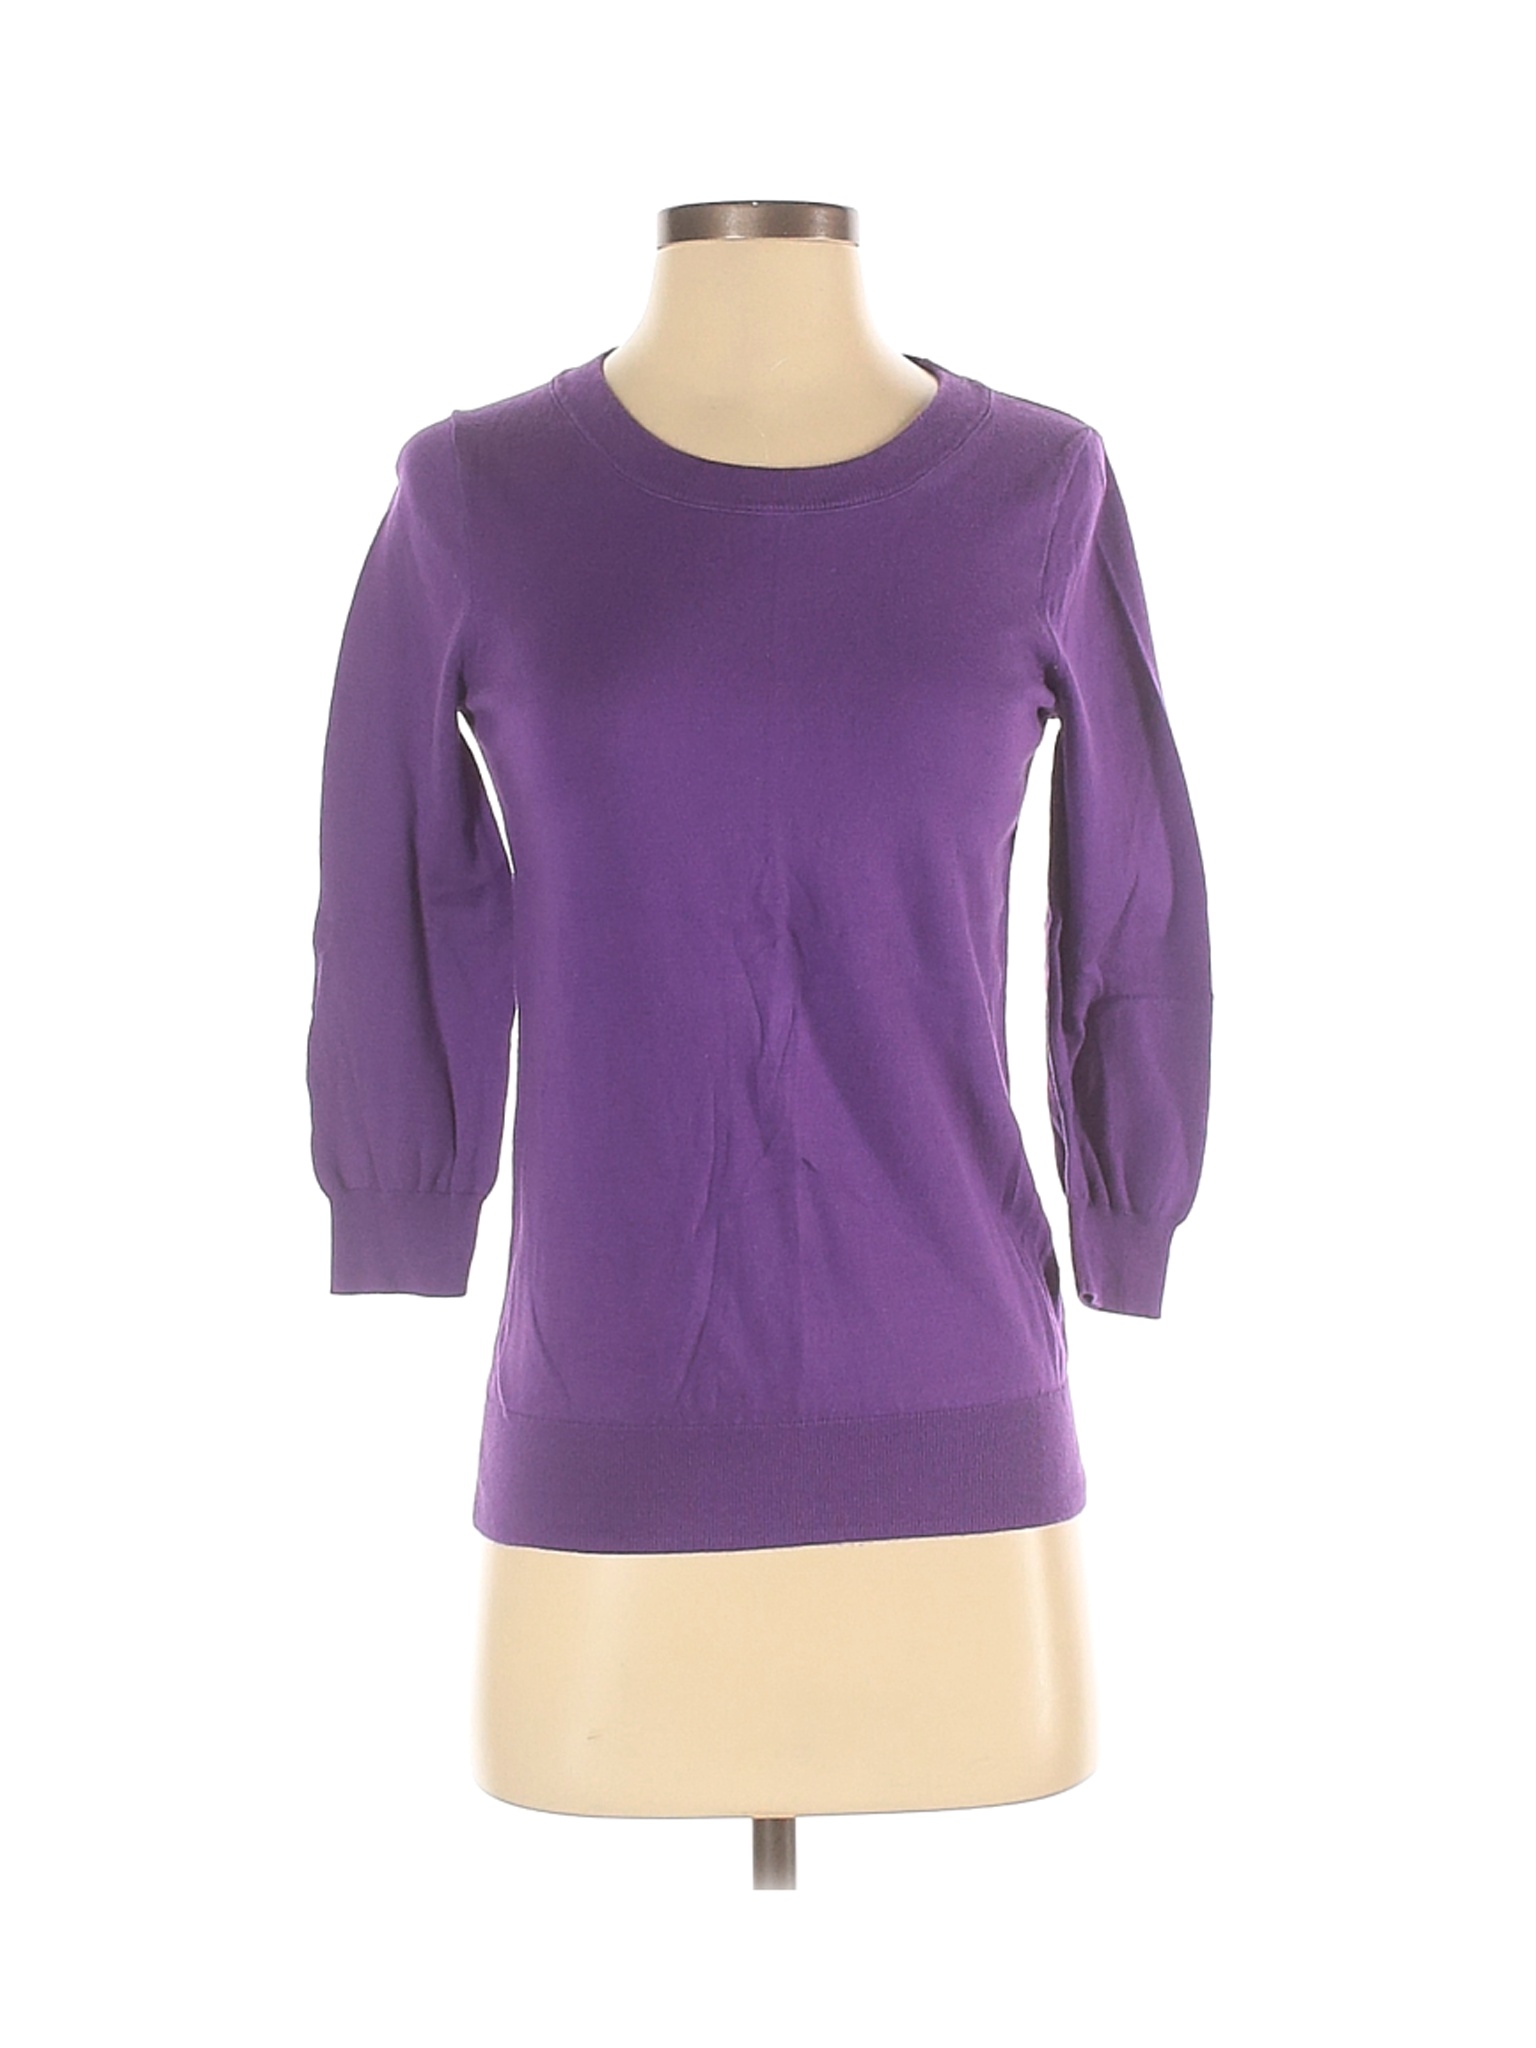 J.Crew Factory Store Women Purple Pullover Sweater S | eBay